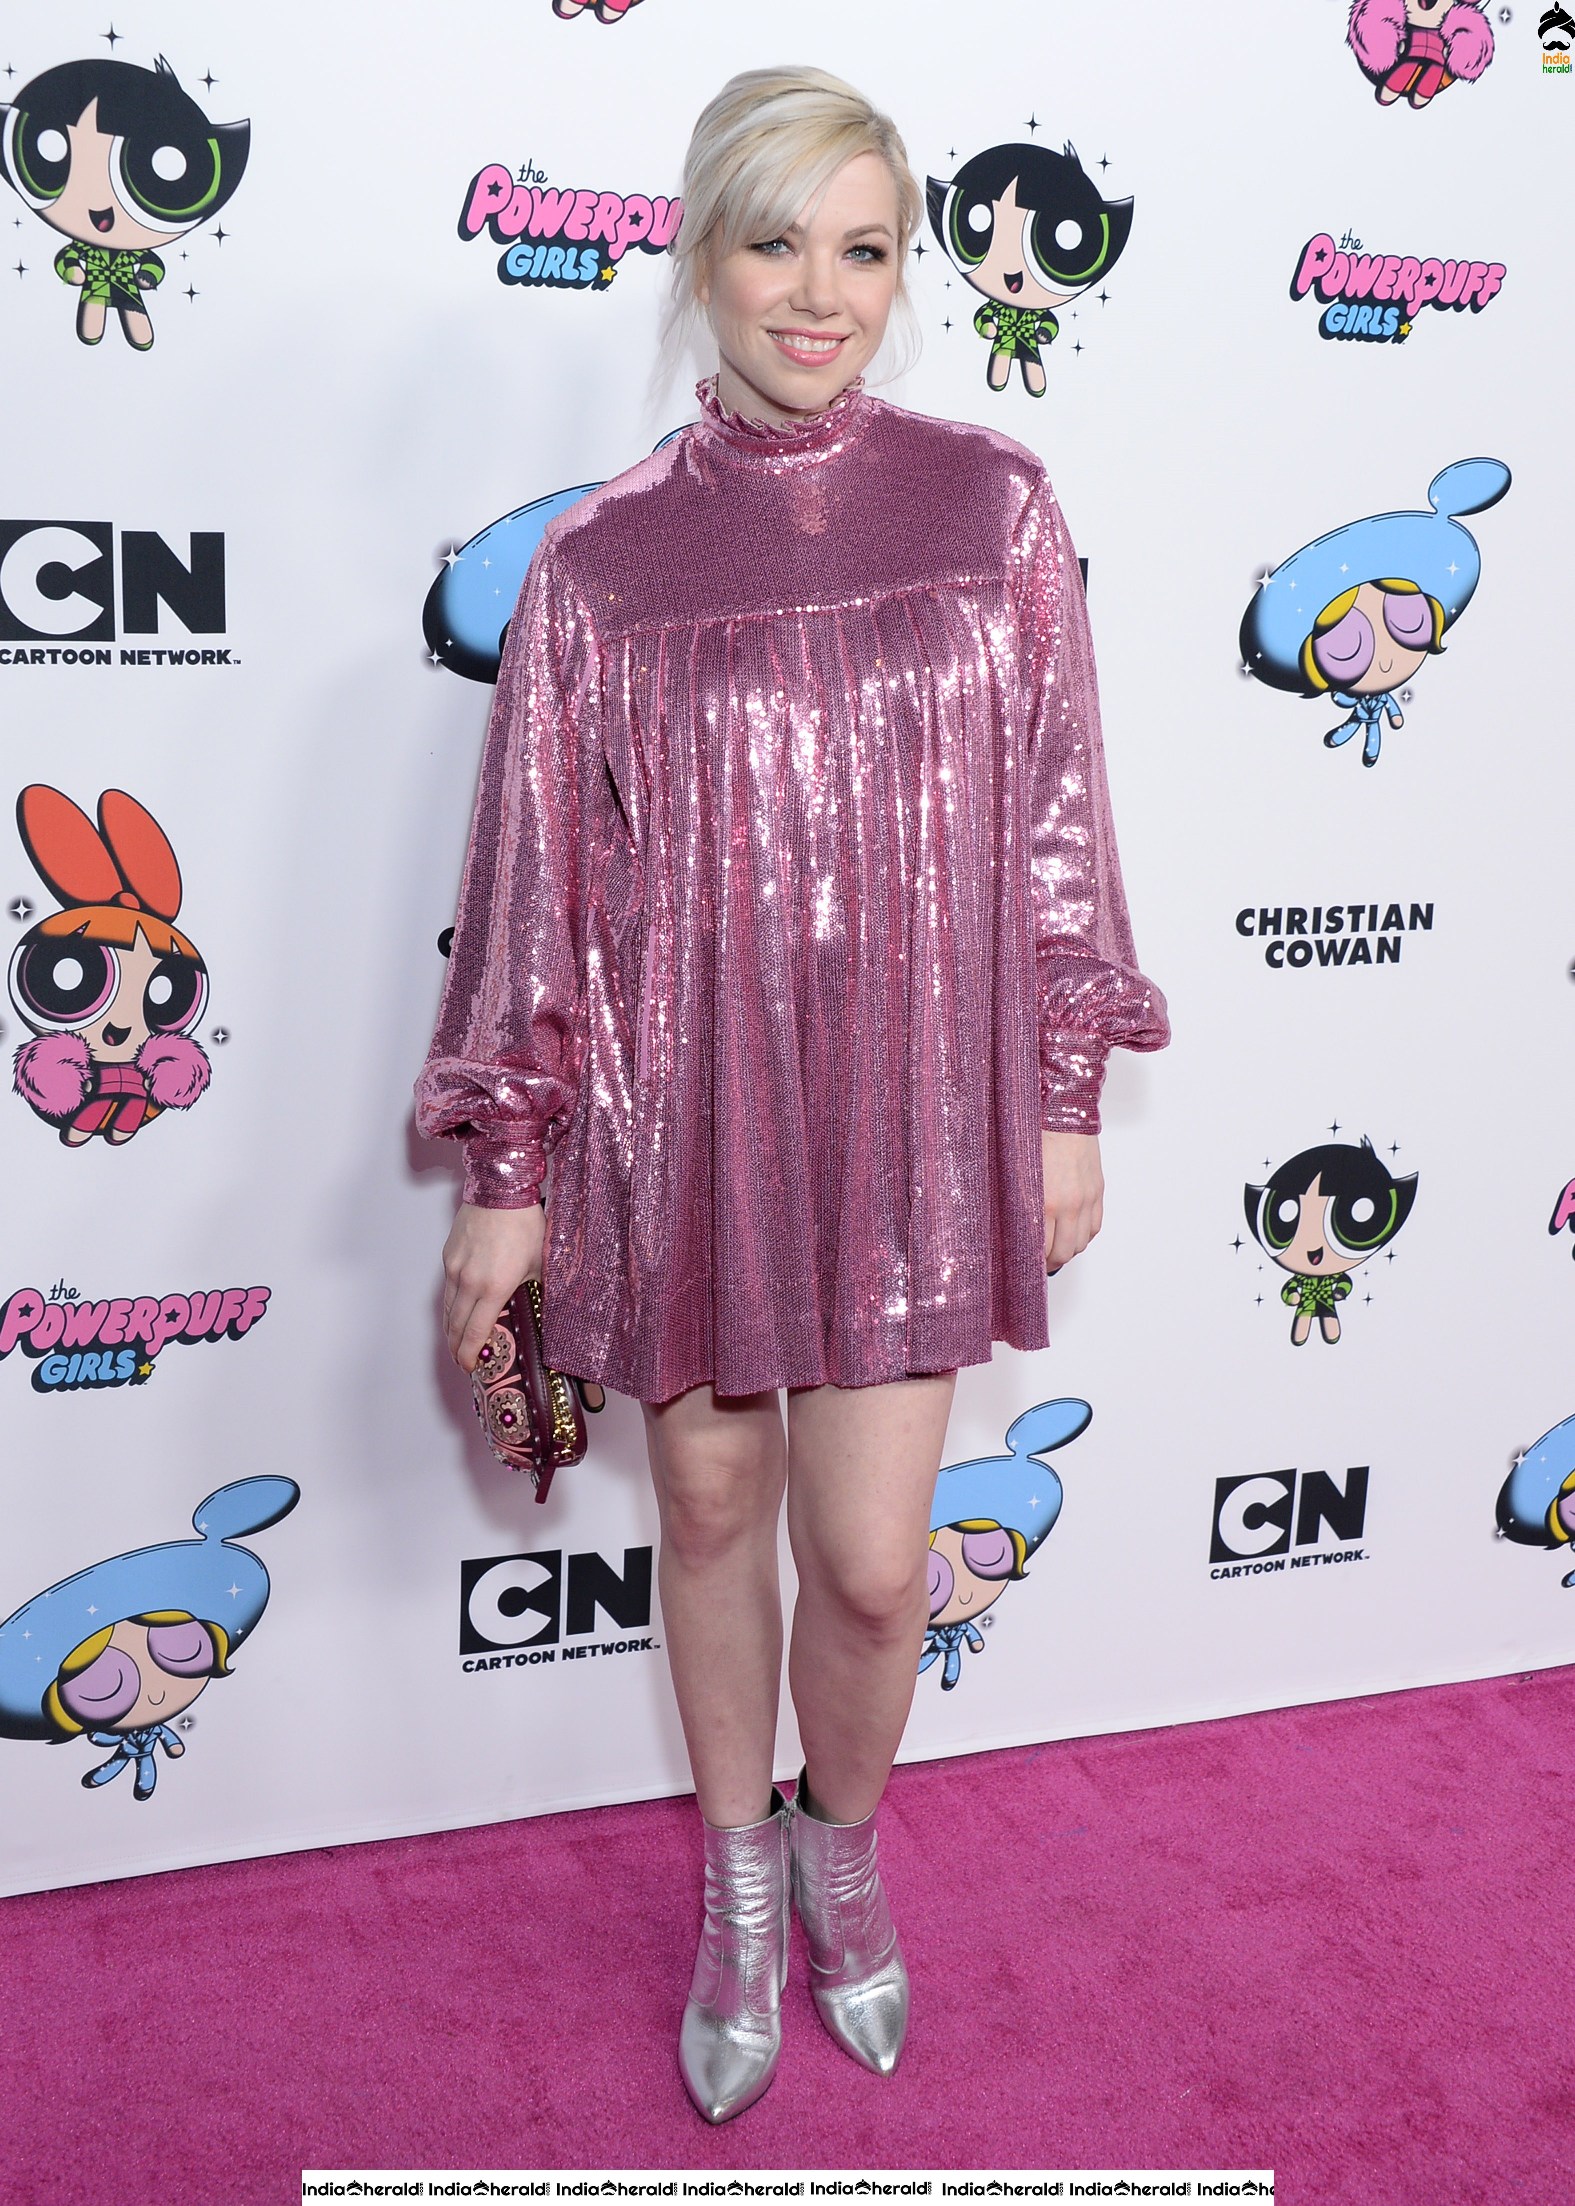 Carly Rae Jepsen at 2020 Christian Cowan x Powerpuff Girls Runway Show in Hollywood